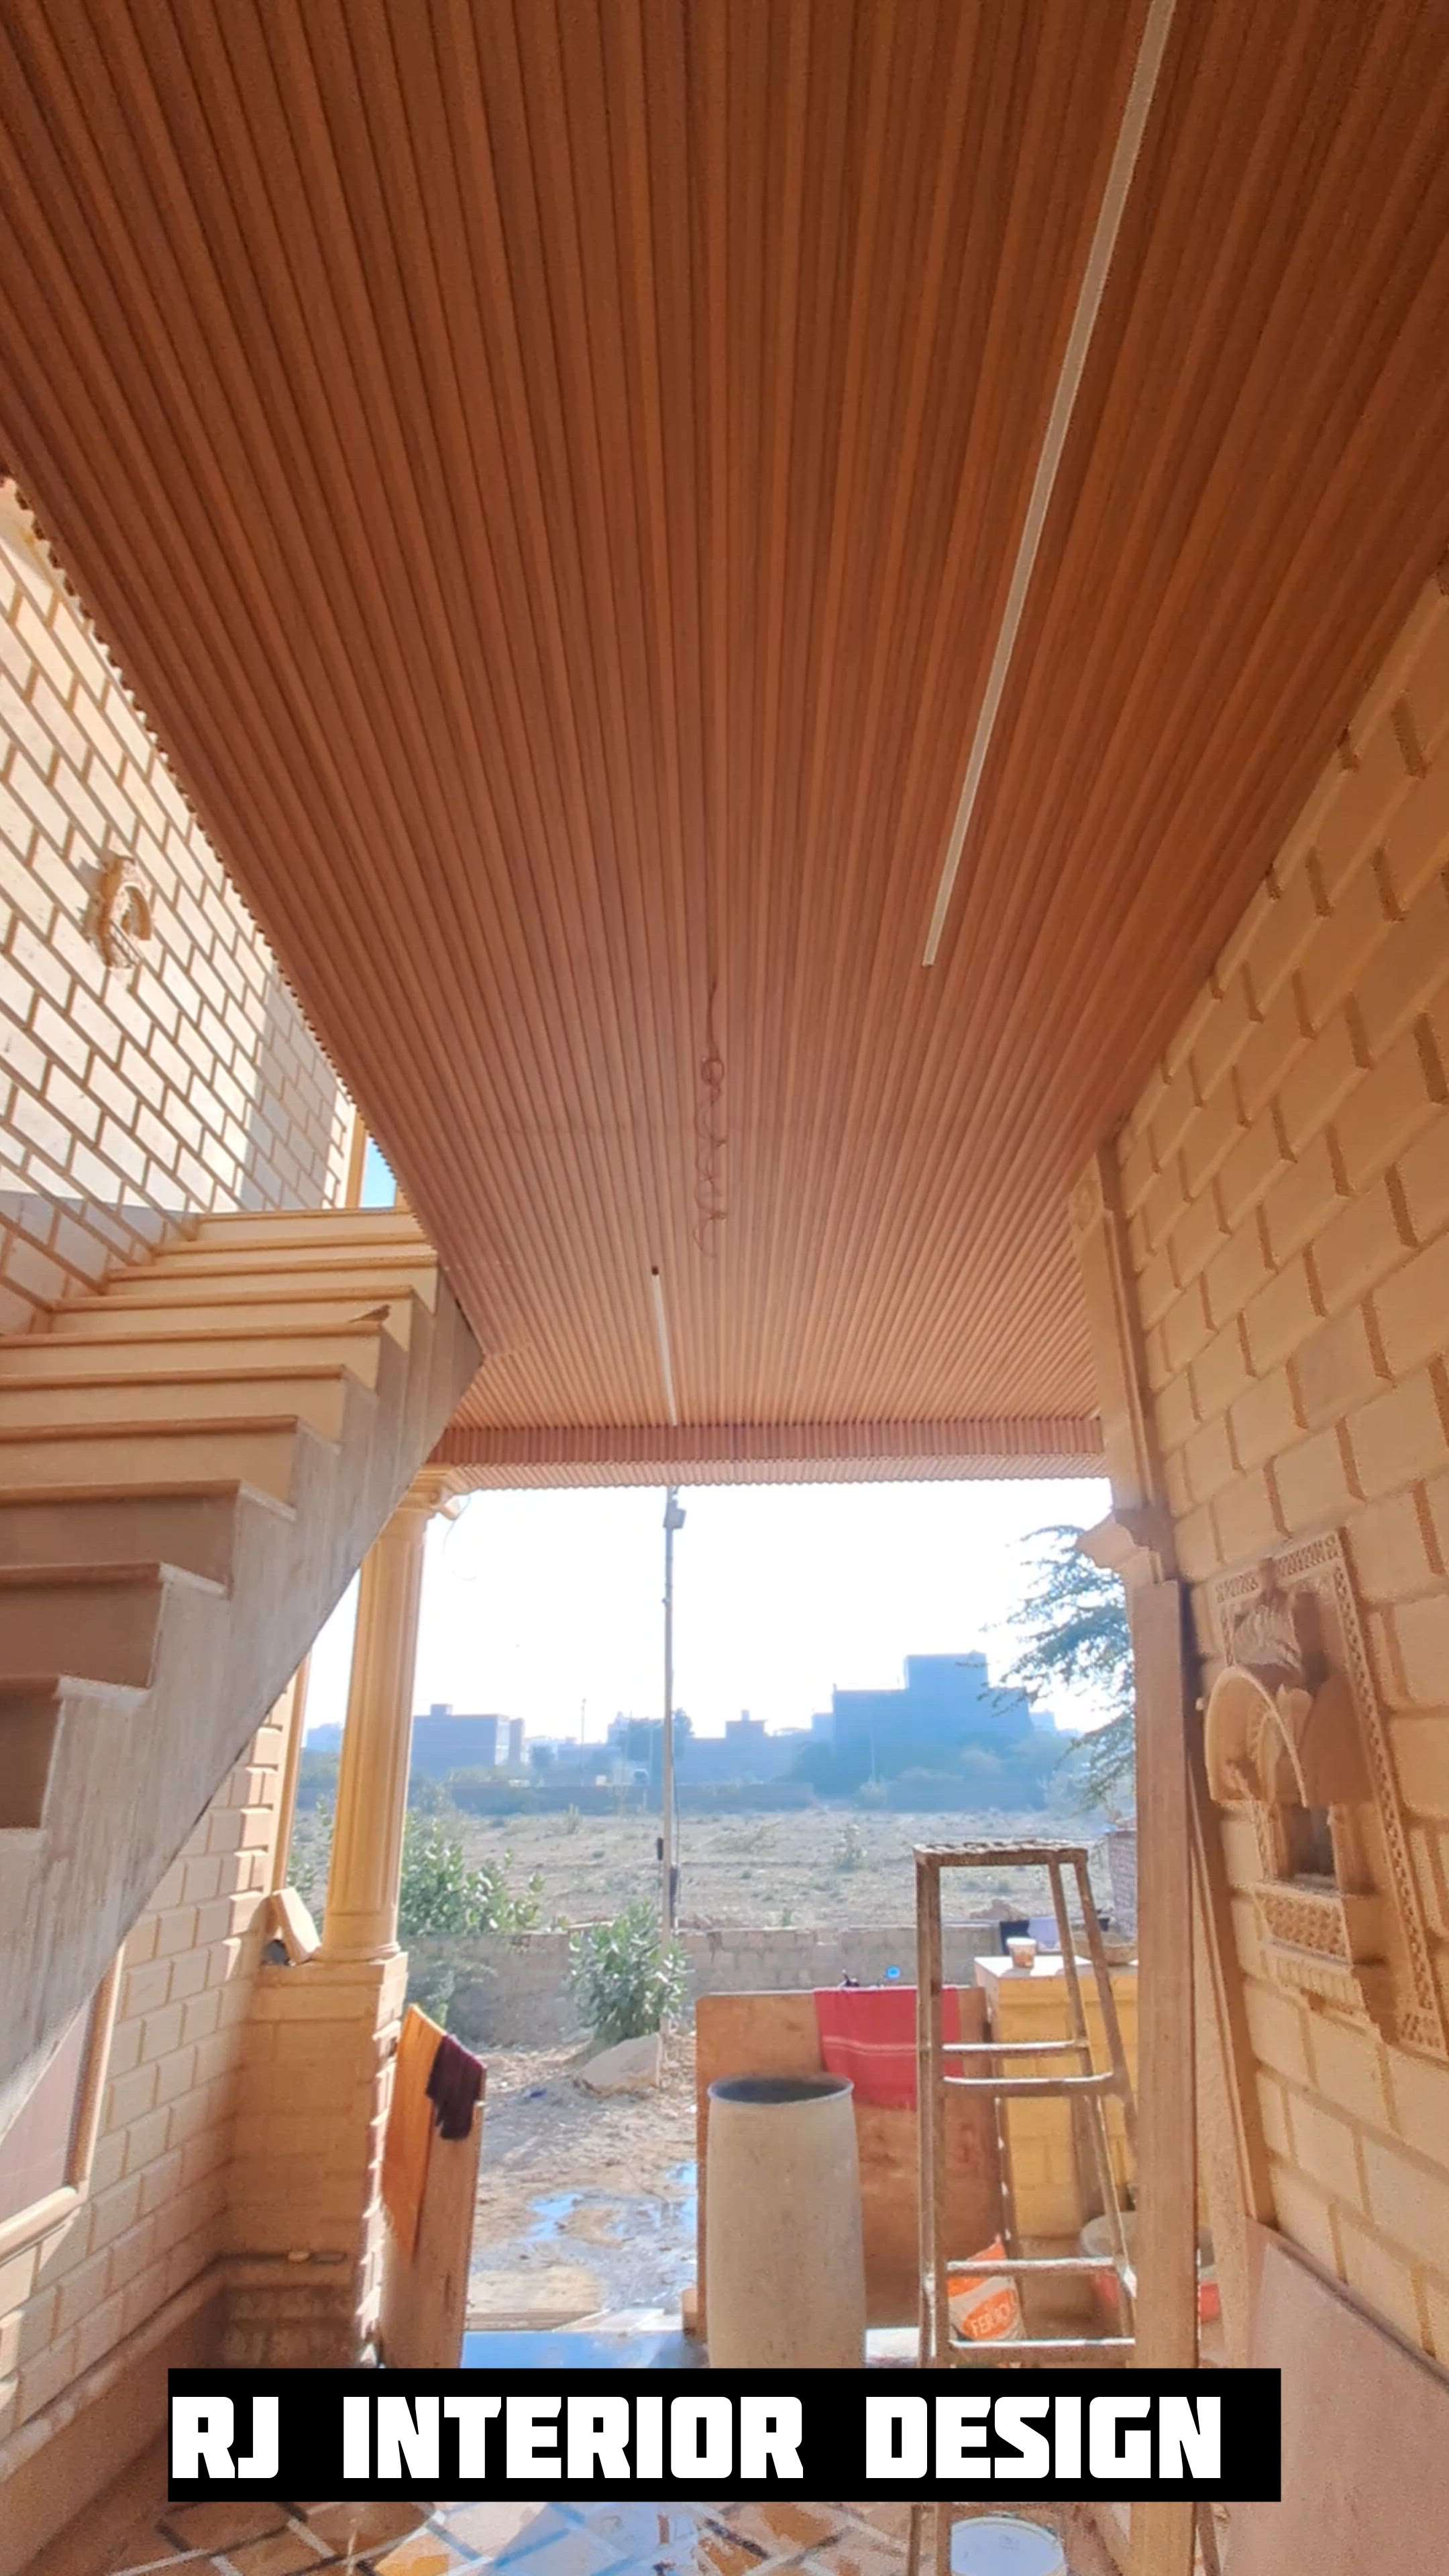 final stage look interior  #inyeriordesign  #interiorpainting  #ducopaint  #furnituremurah  #jaislmerproject  #jaisalmer  #haritage  #modrenmandirdesign  #interiorpainting